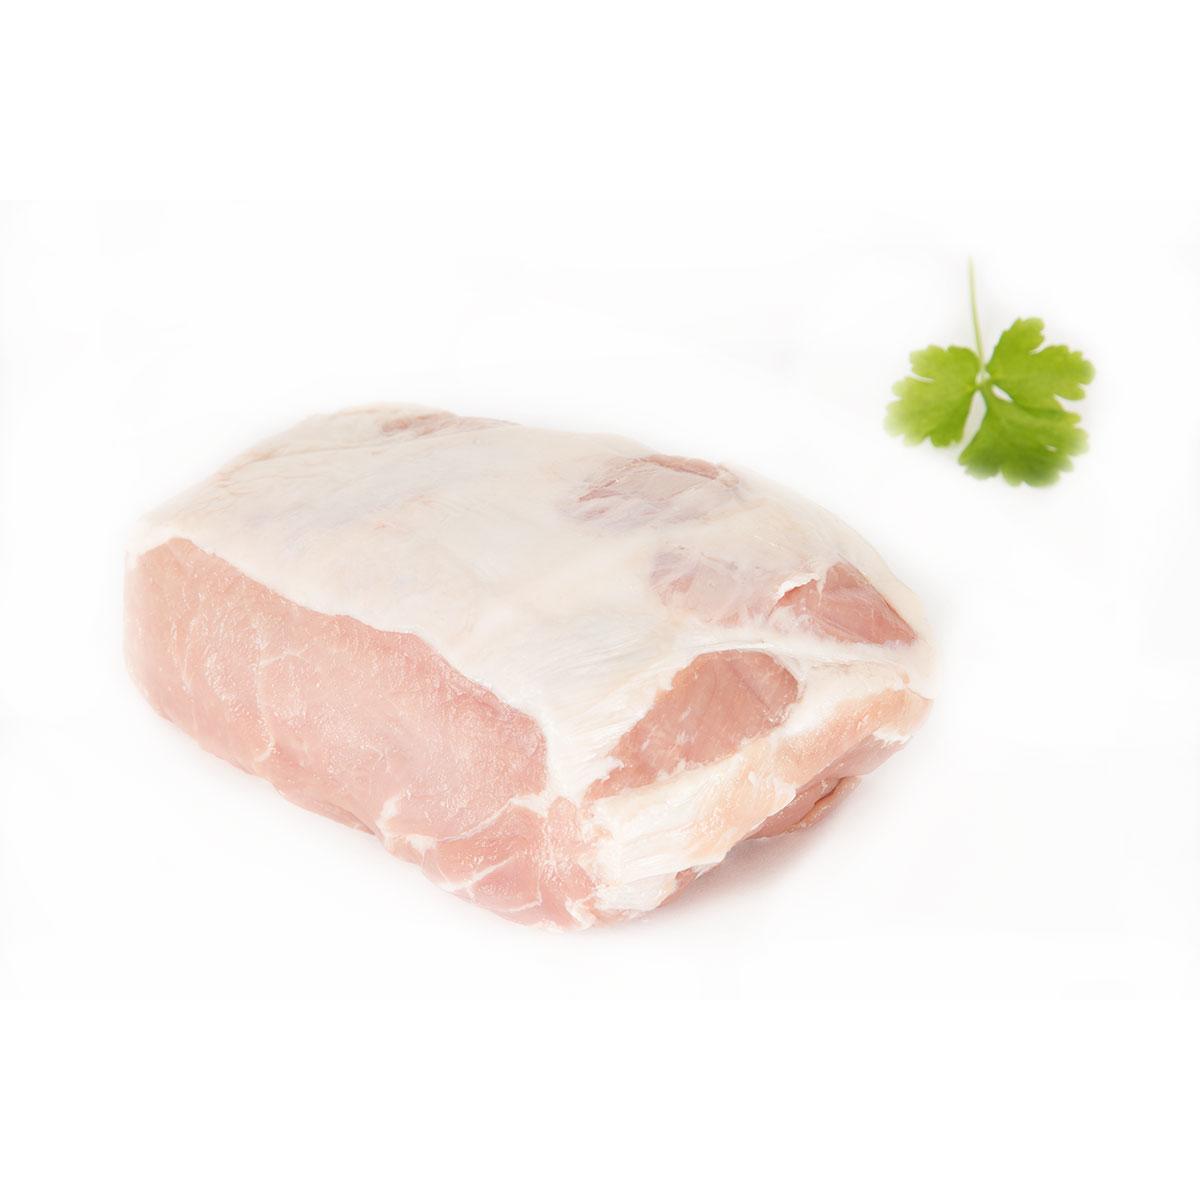 Melins's Pork chop piece boneless'